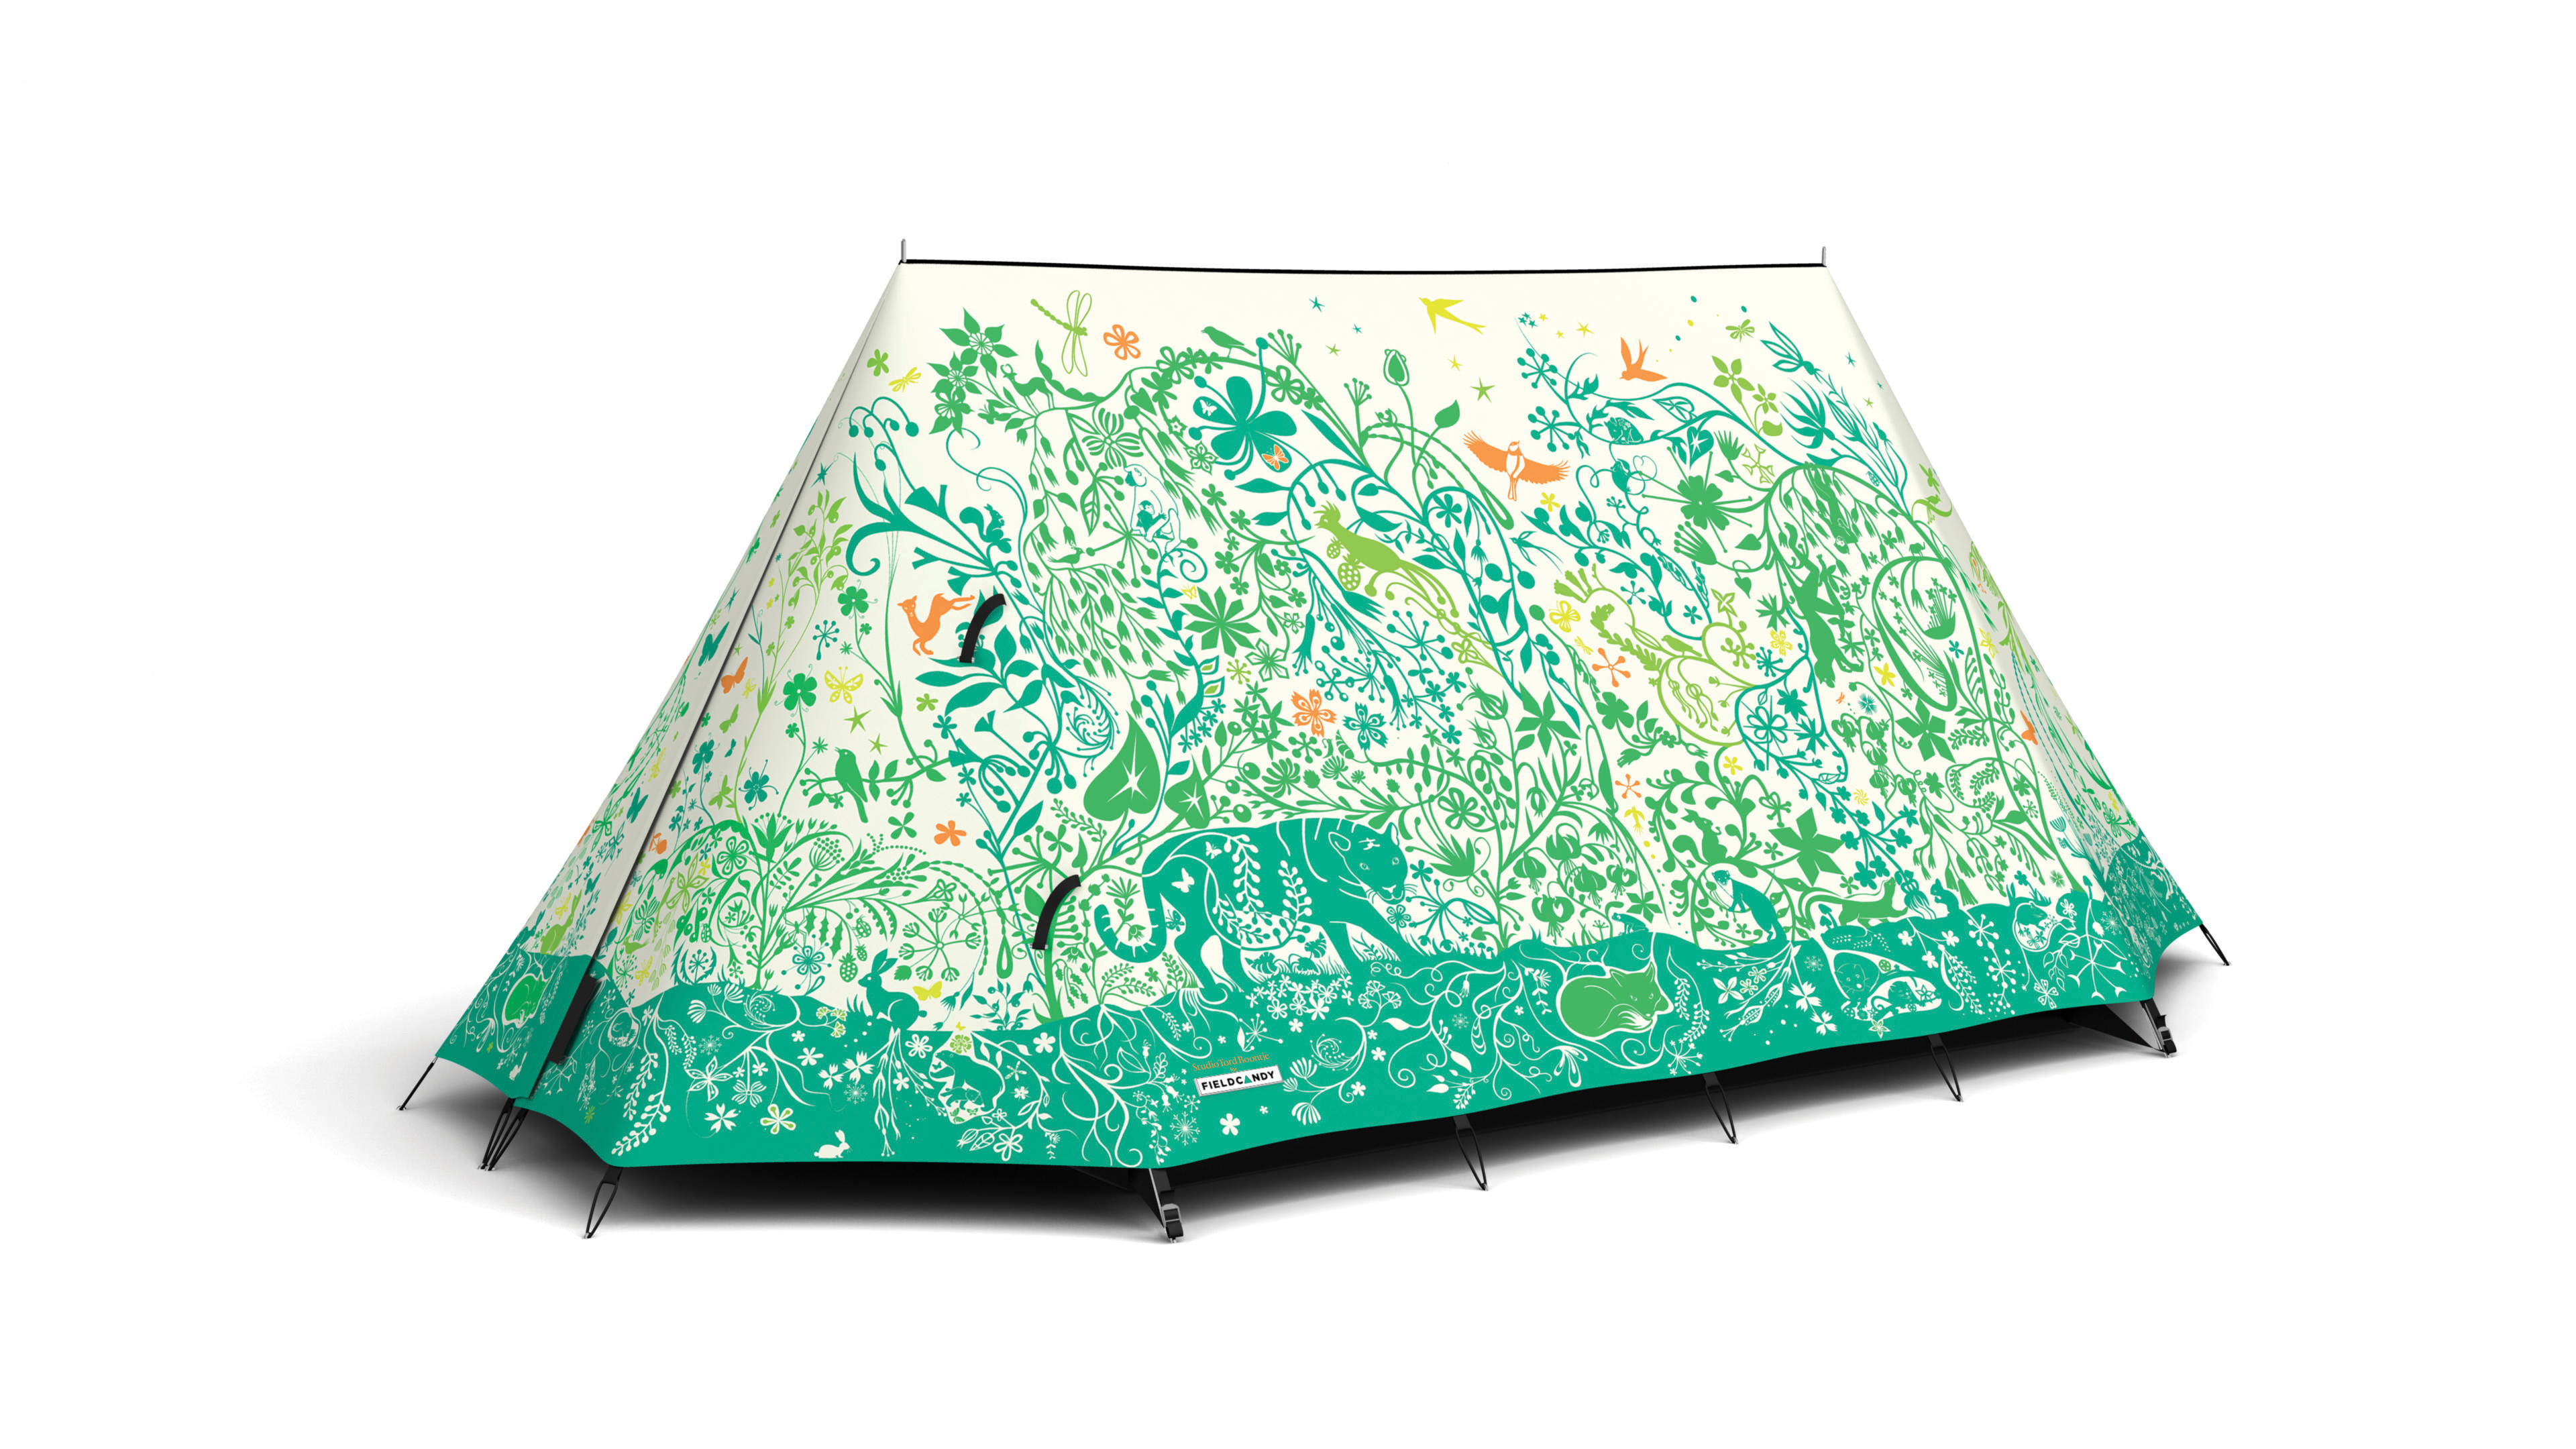 Wild-Life tent for FieldCandy